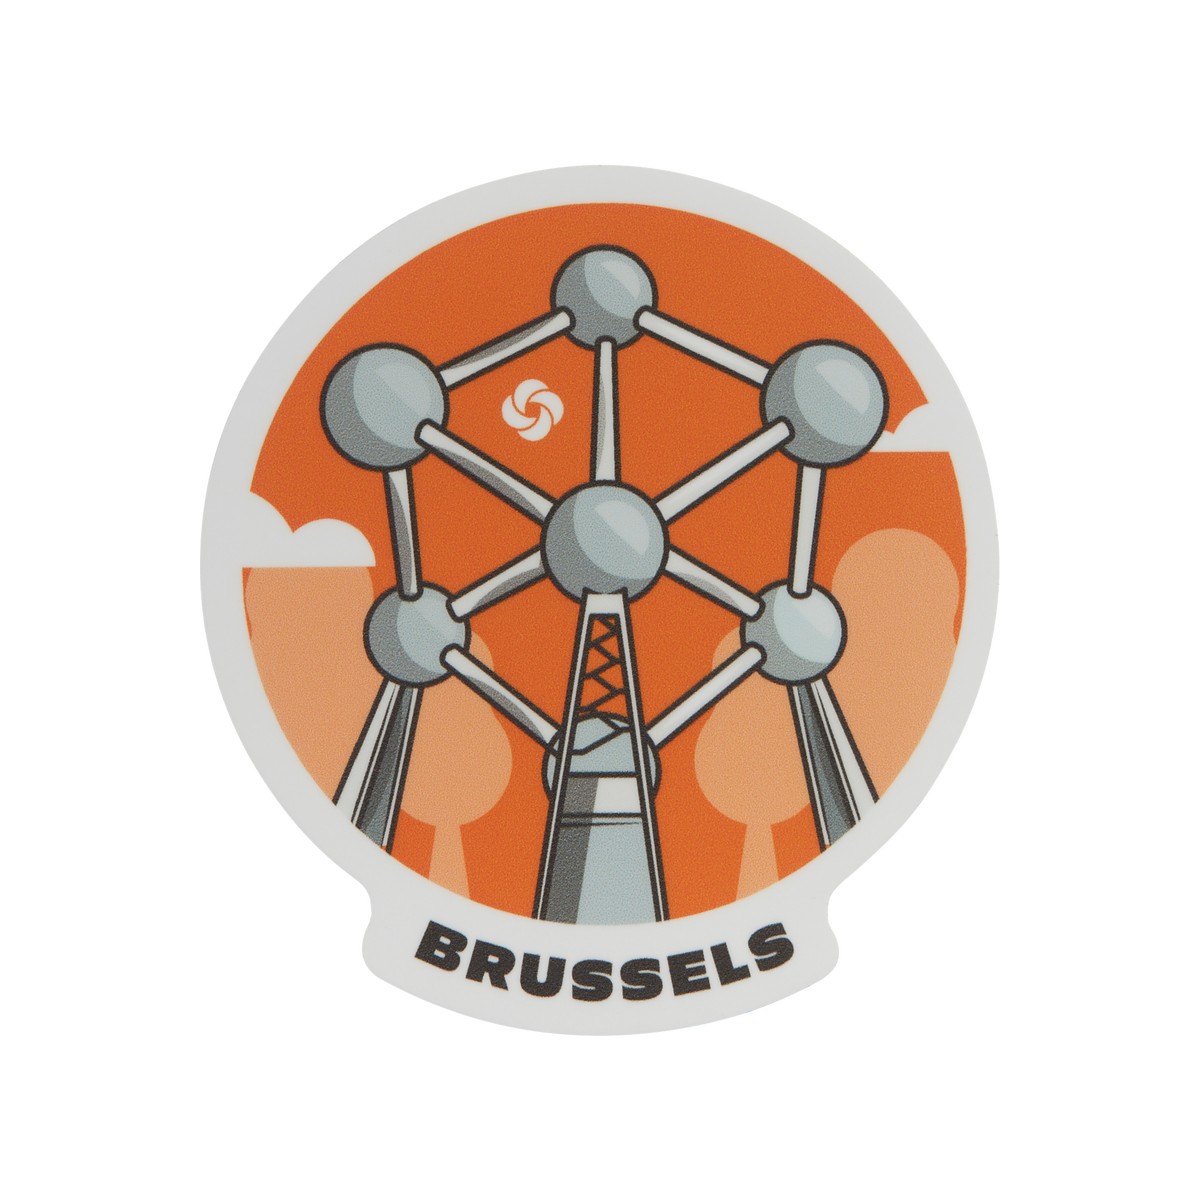 Samsonite Travel Accessories Luggage Stickers Brussels